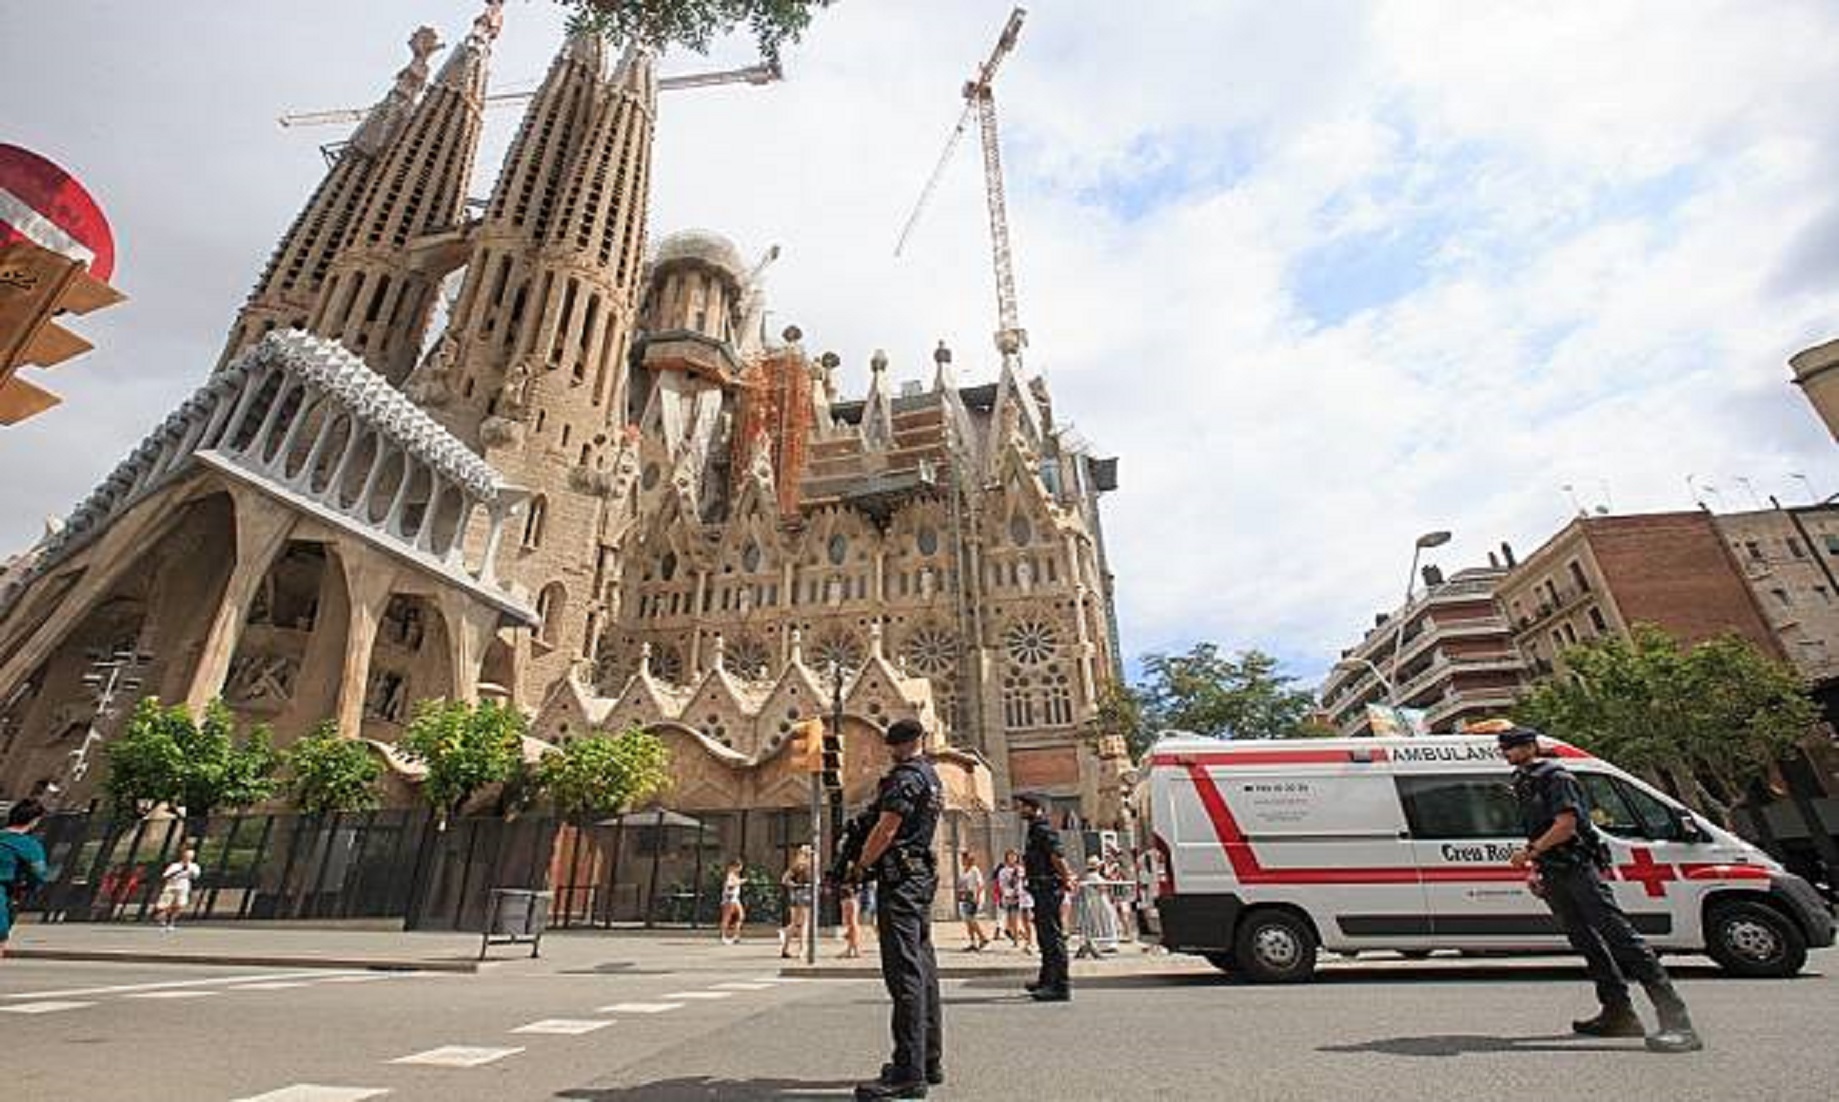 Spain’s Iconic Sagrada Familia Basilica Reopens